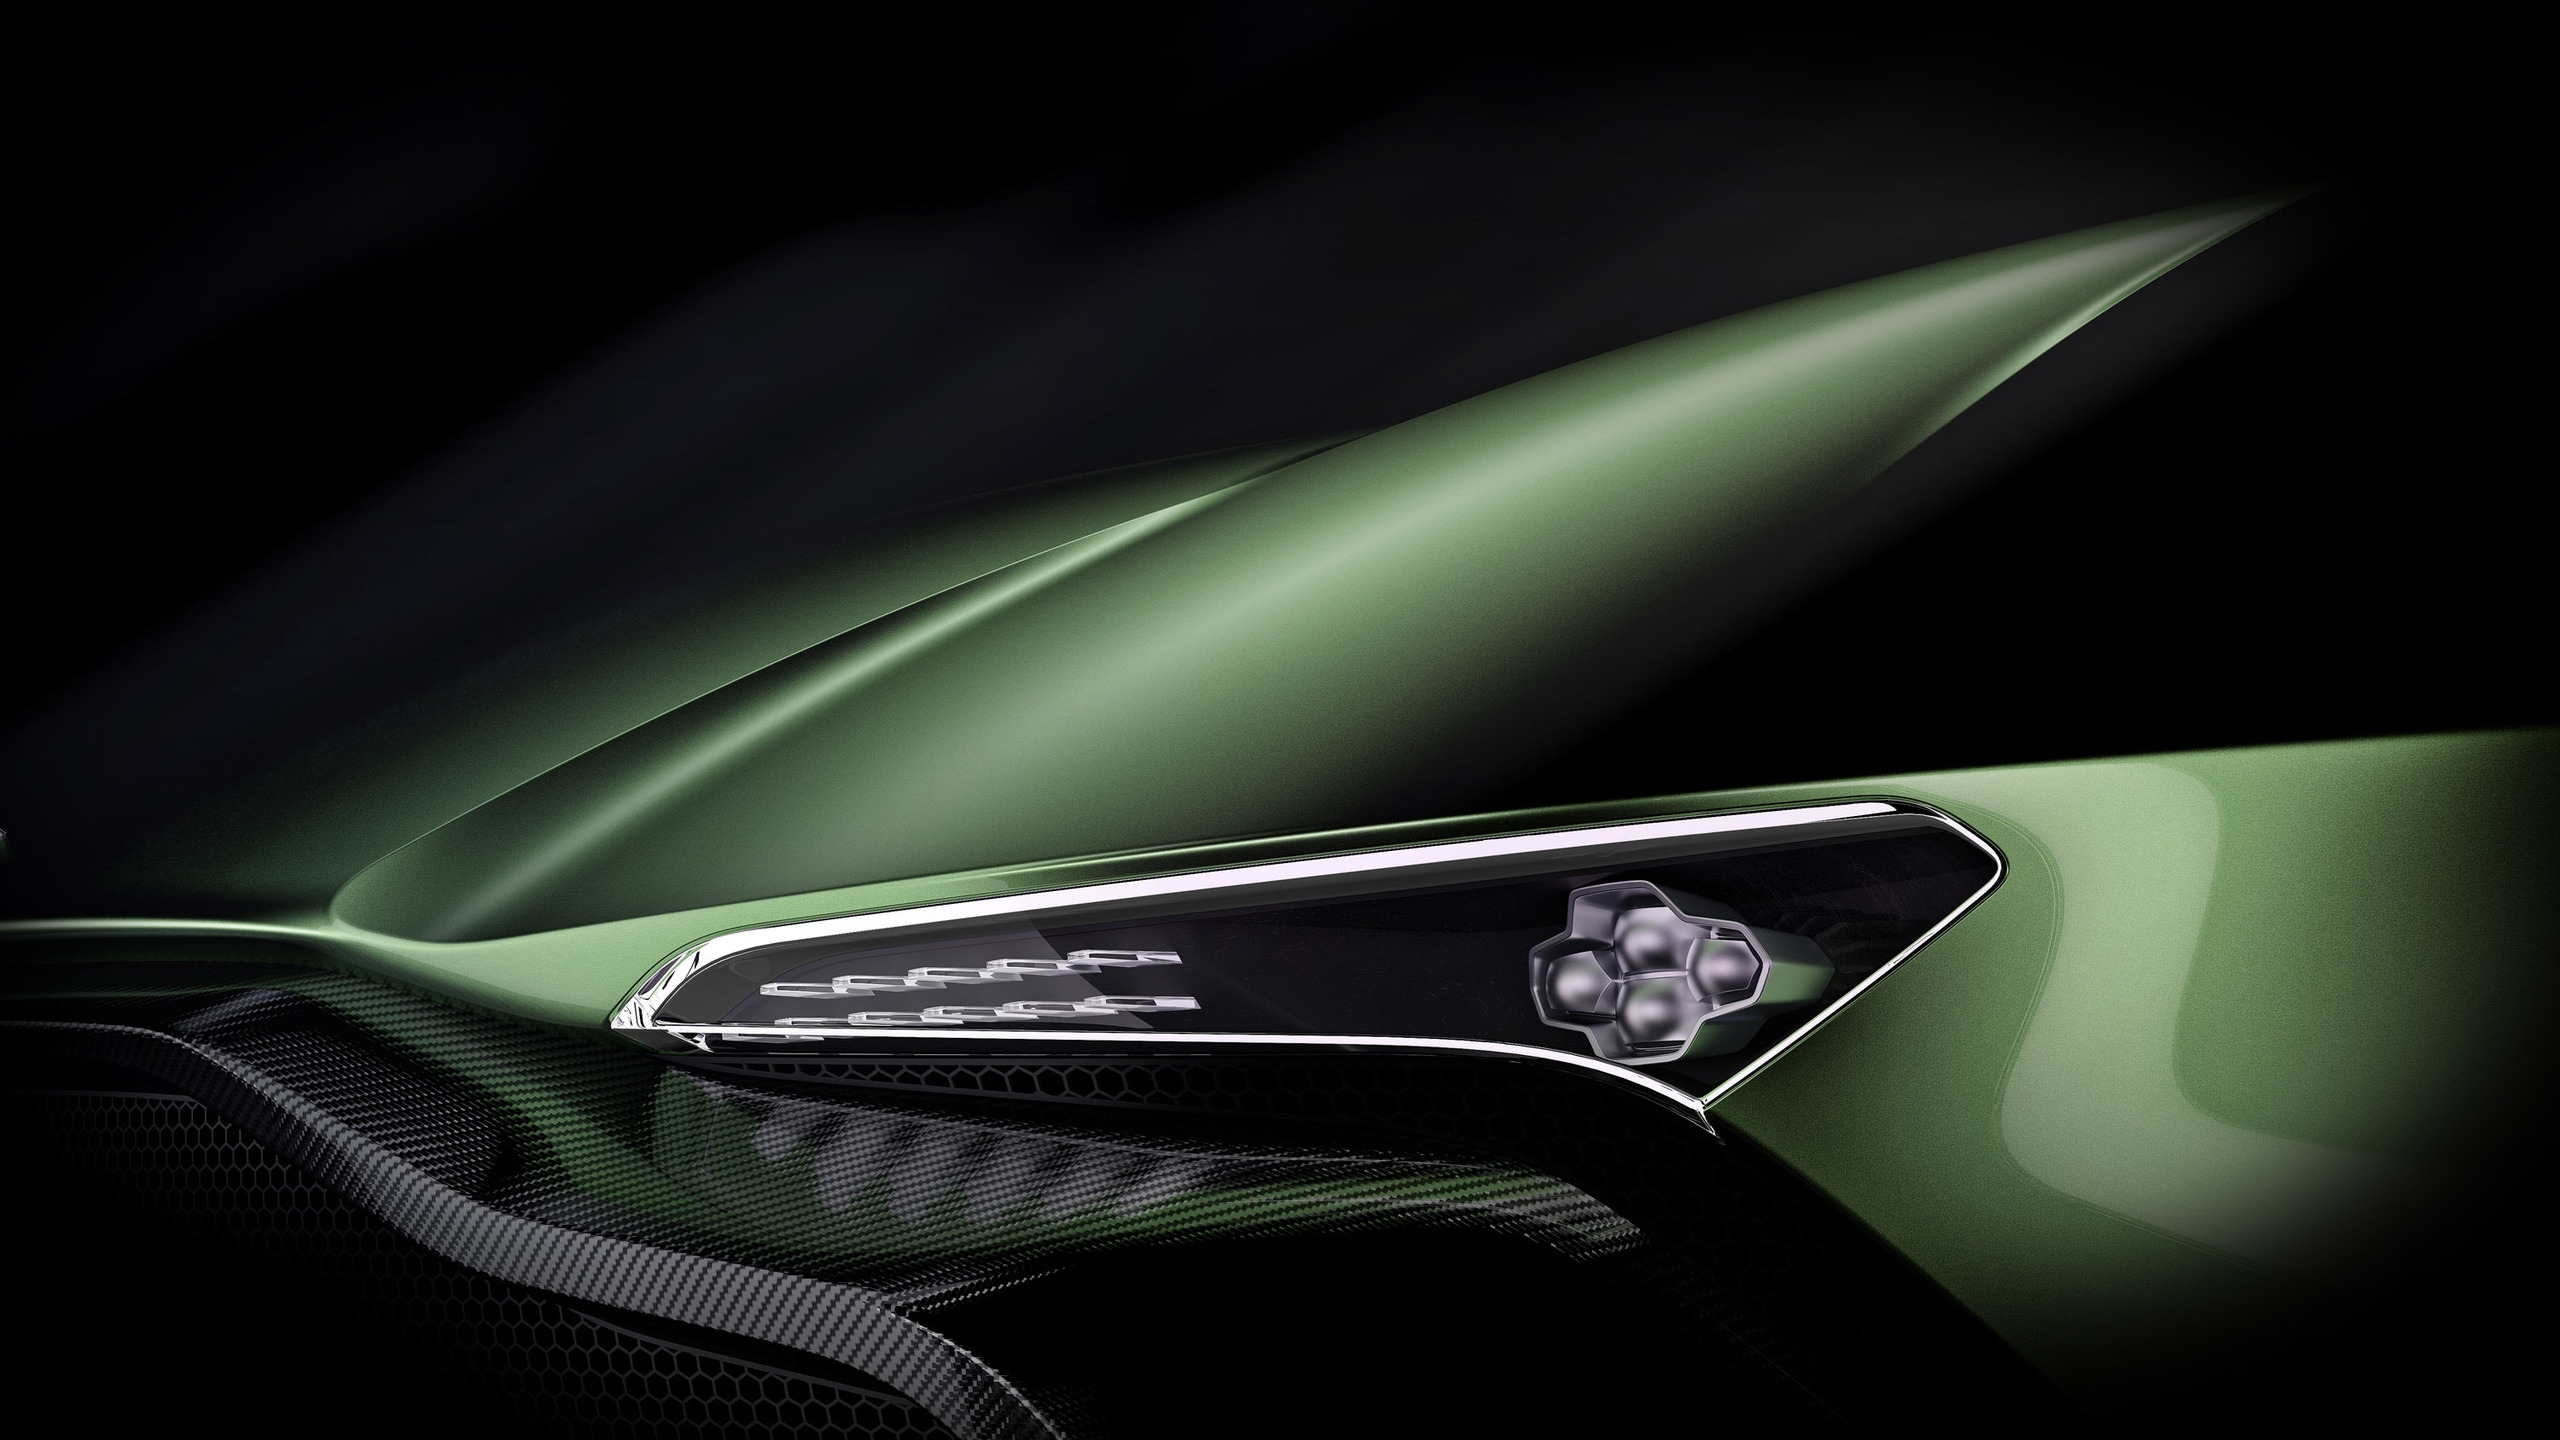 Aston Martin Vulcan Headlight for 2560x1440 HDTV resolution